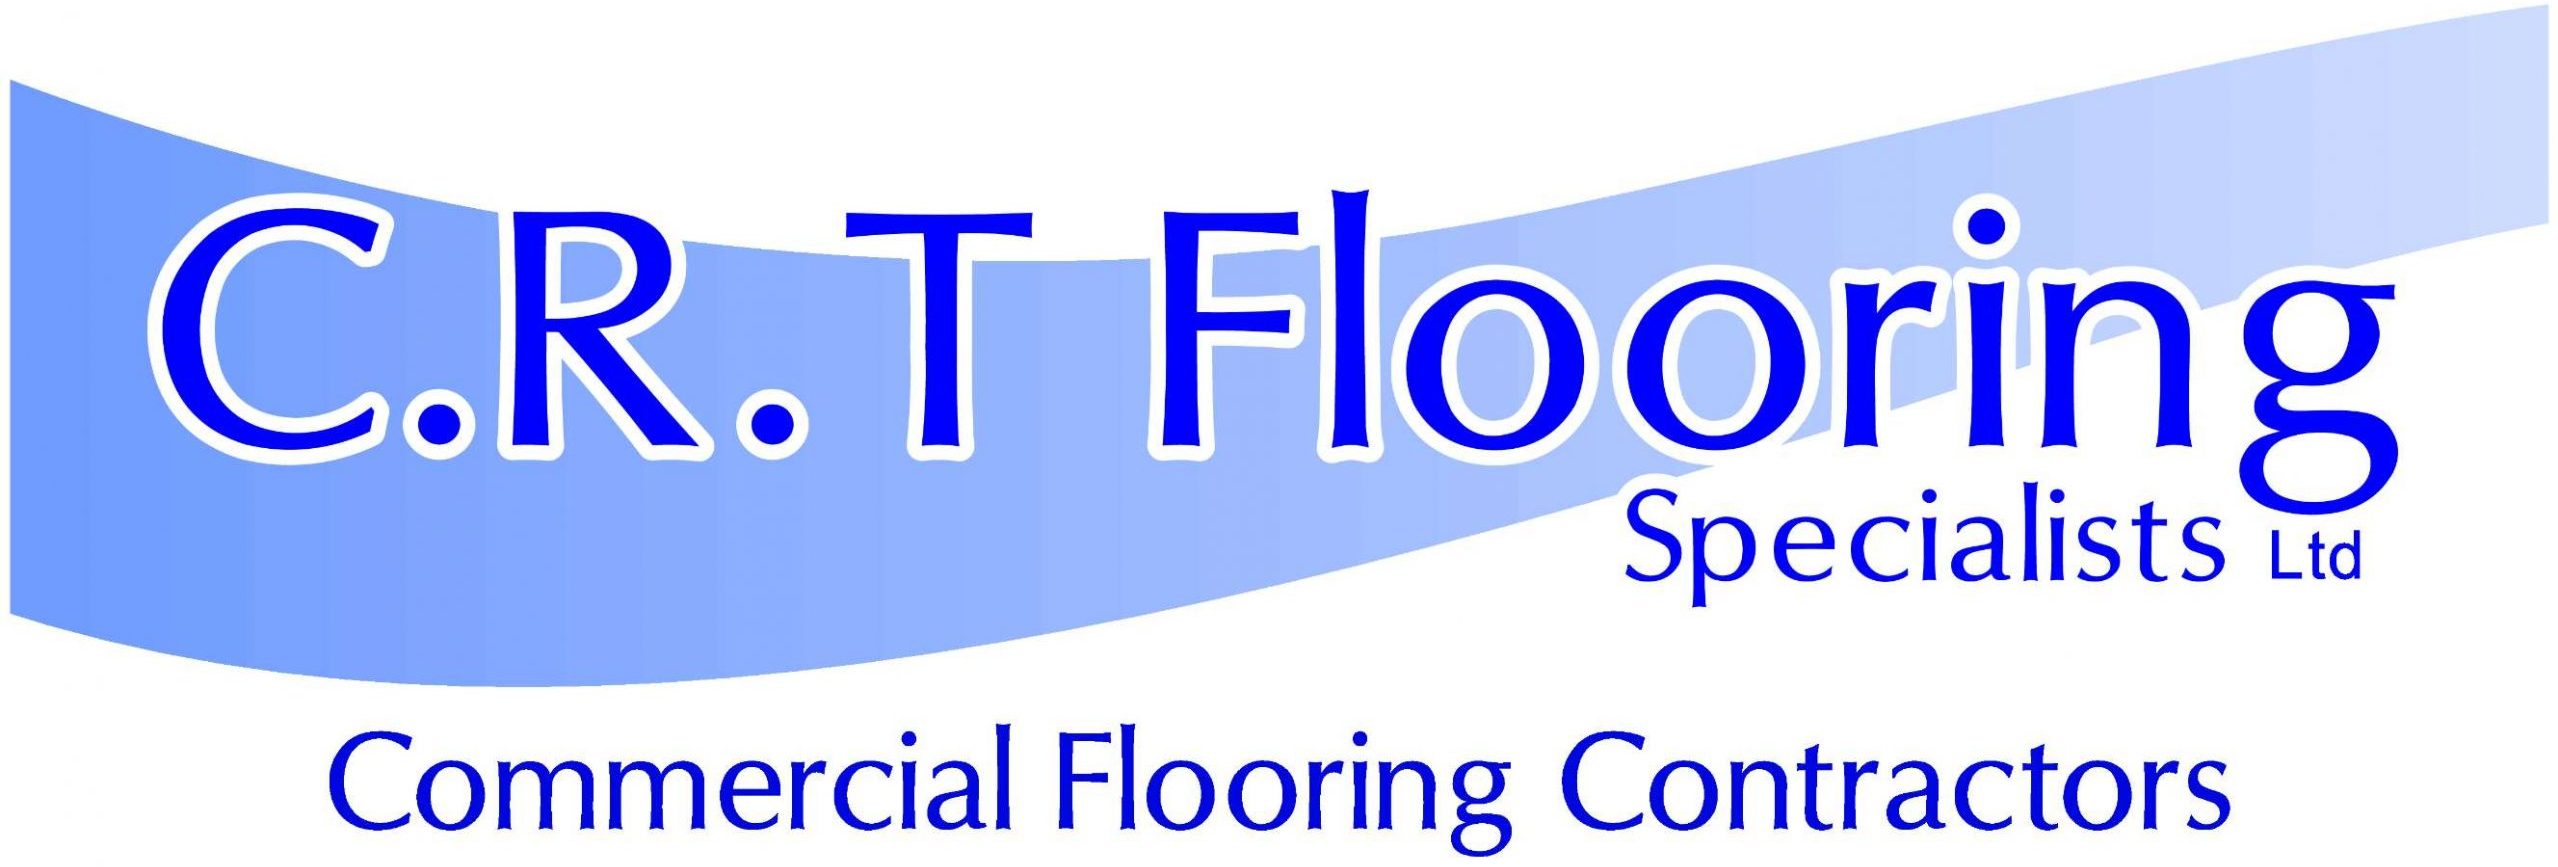 CRT Flooring Specialists Ltd